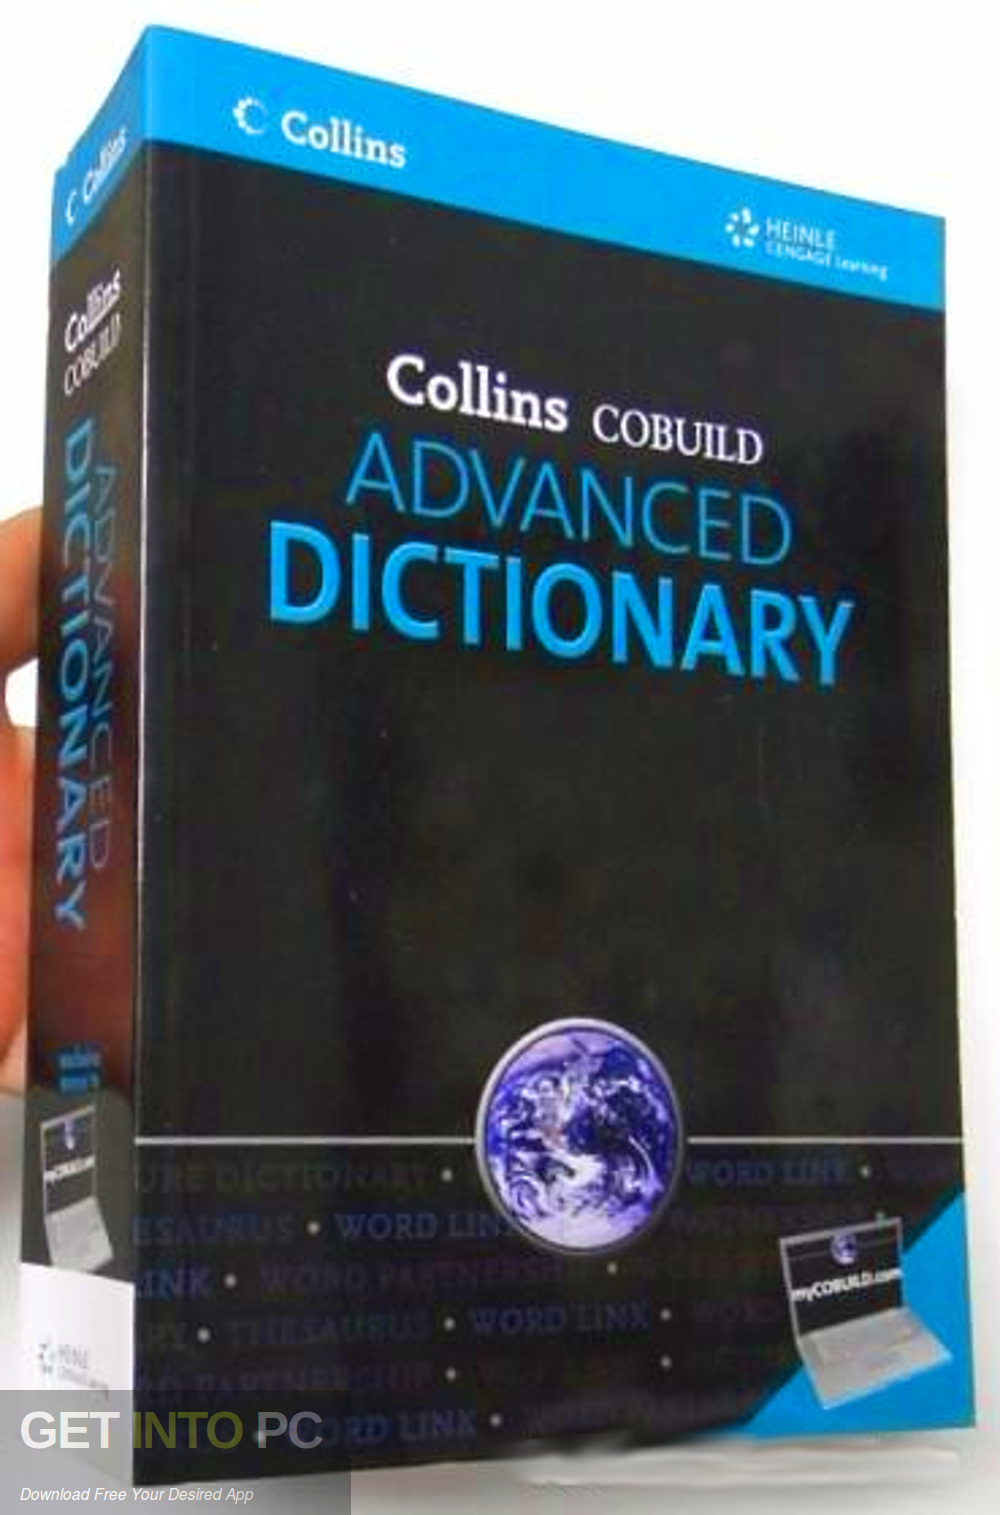 Collins COBUILD Advanced Dictionary 2009 Free Download GetintoPC.com